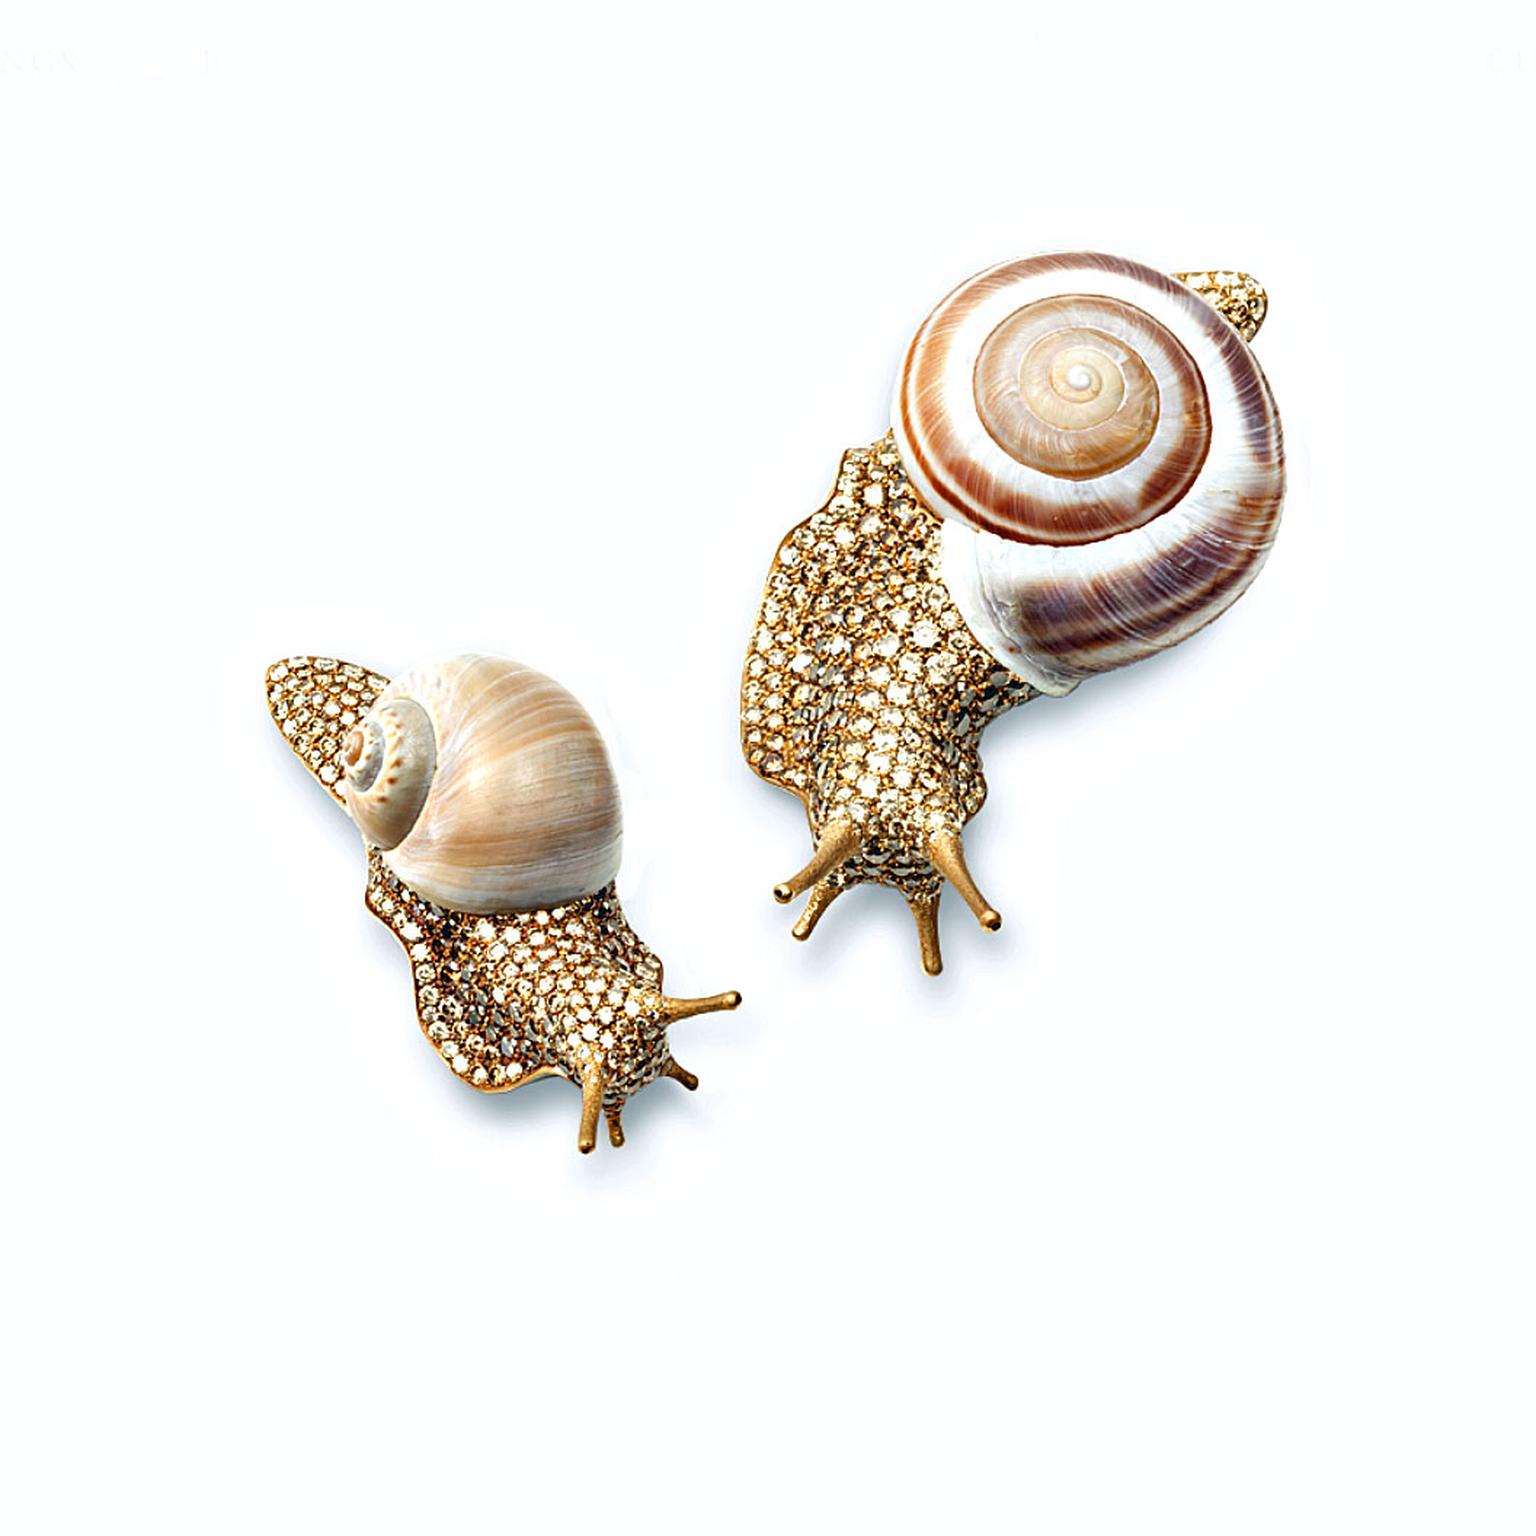 Hemmerle snail shell brooches